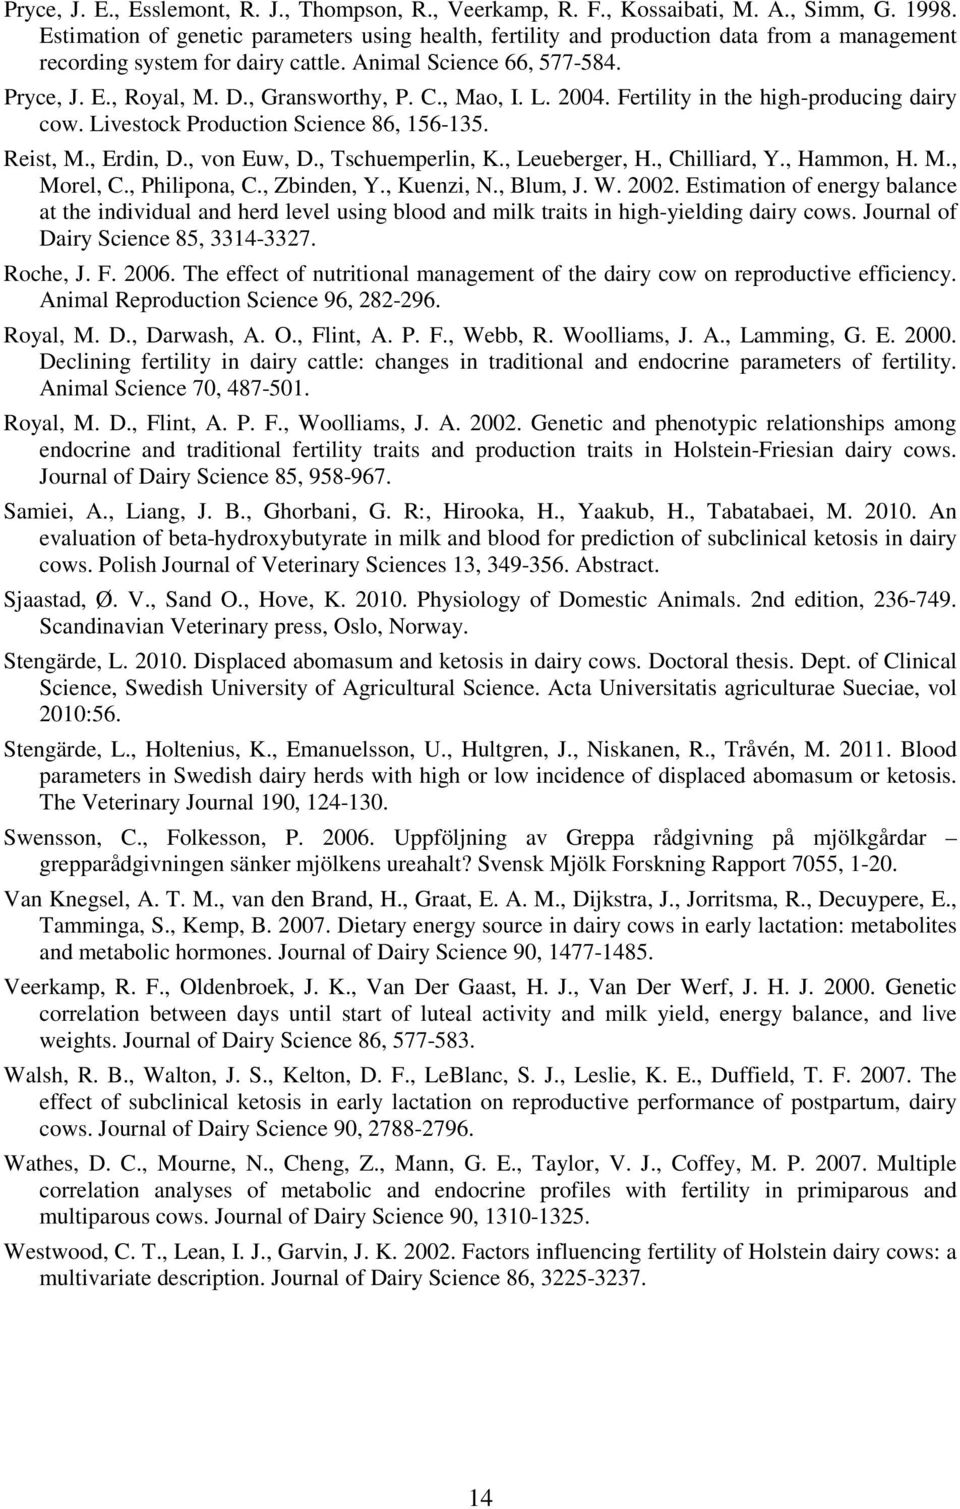 , Gransworthy, P. C., Mao, I. L. 2004. Fertility in the high-producing dairy cow. Livestock Production Science 86, 156-135. Reist, M., Erdin, D., von Euw, D., Tschuemperlin, K., Leueberger, H.